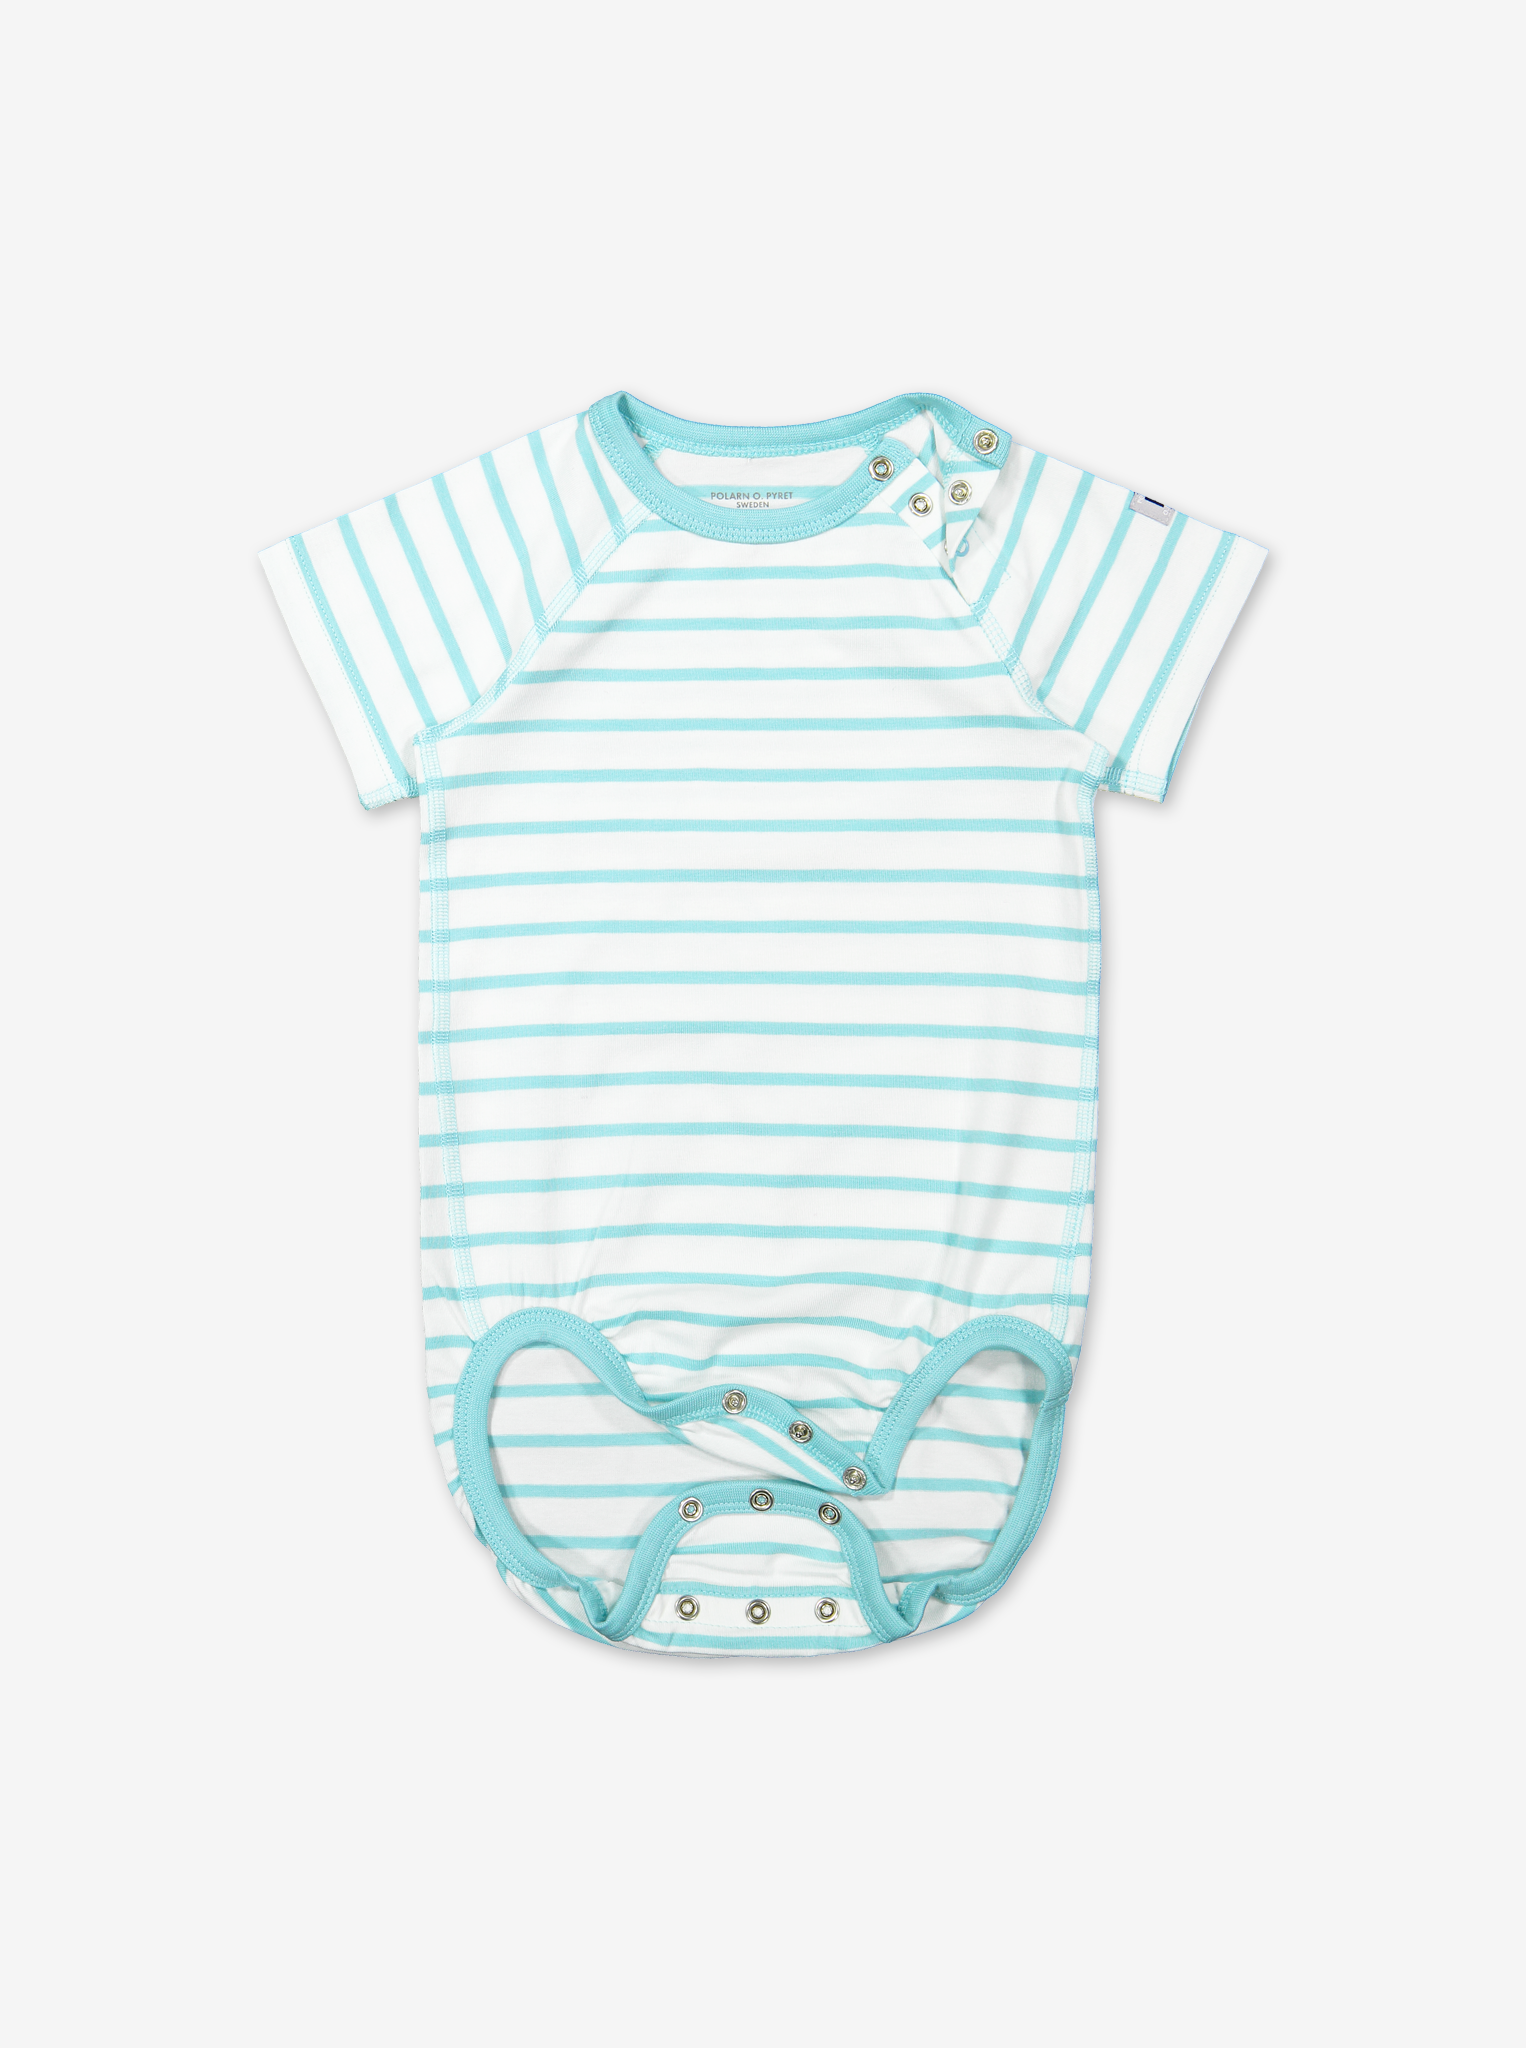 Striped Baby Bodysuit-Unisex-6-12m-Turquoise